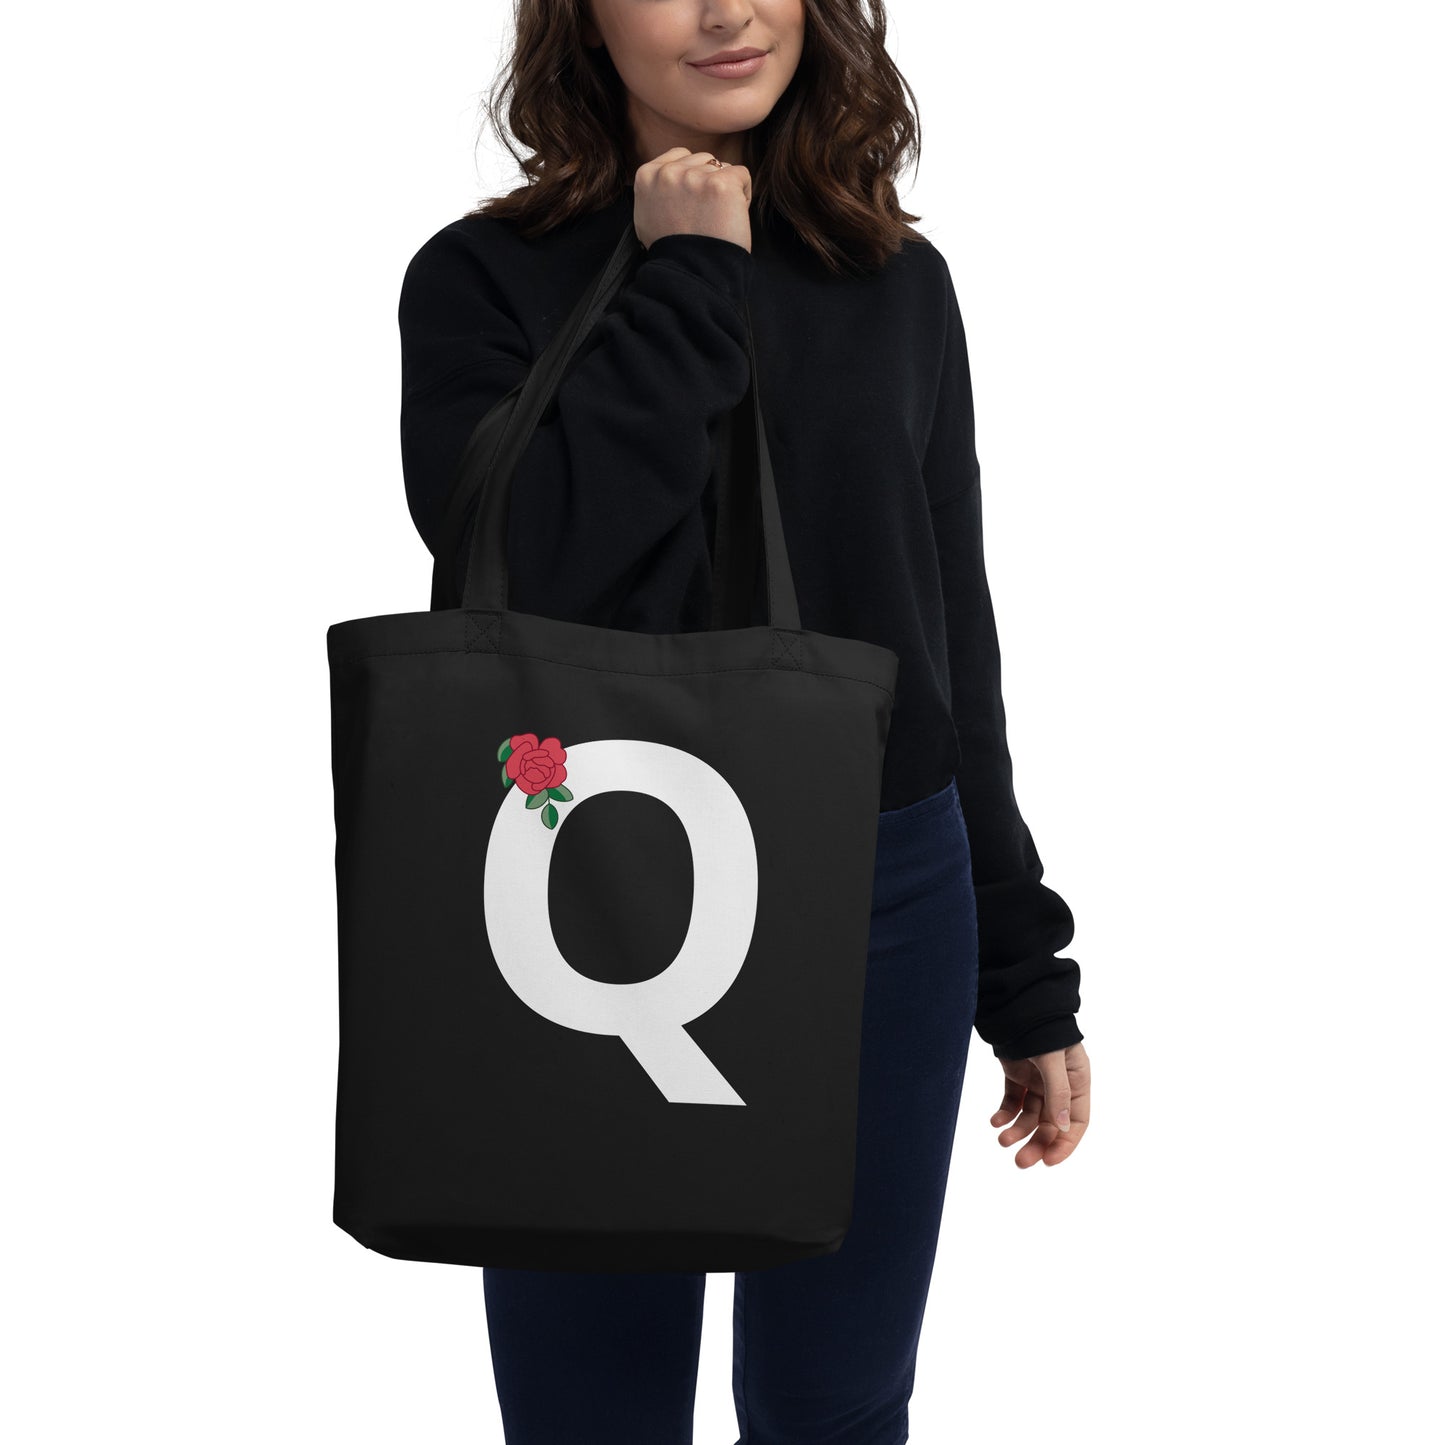 Letter "Q" Eco Tote Bag